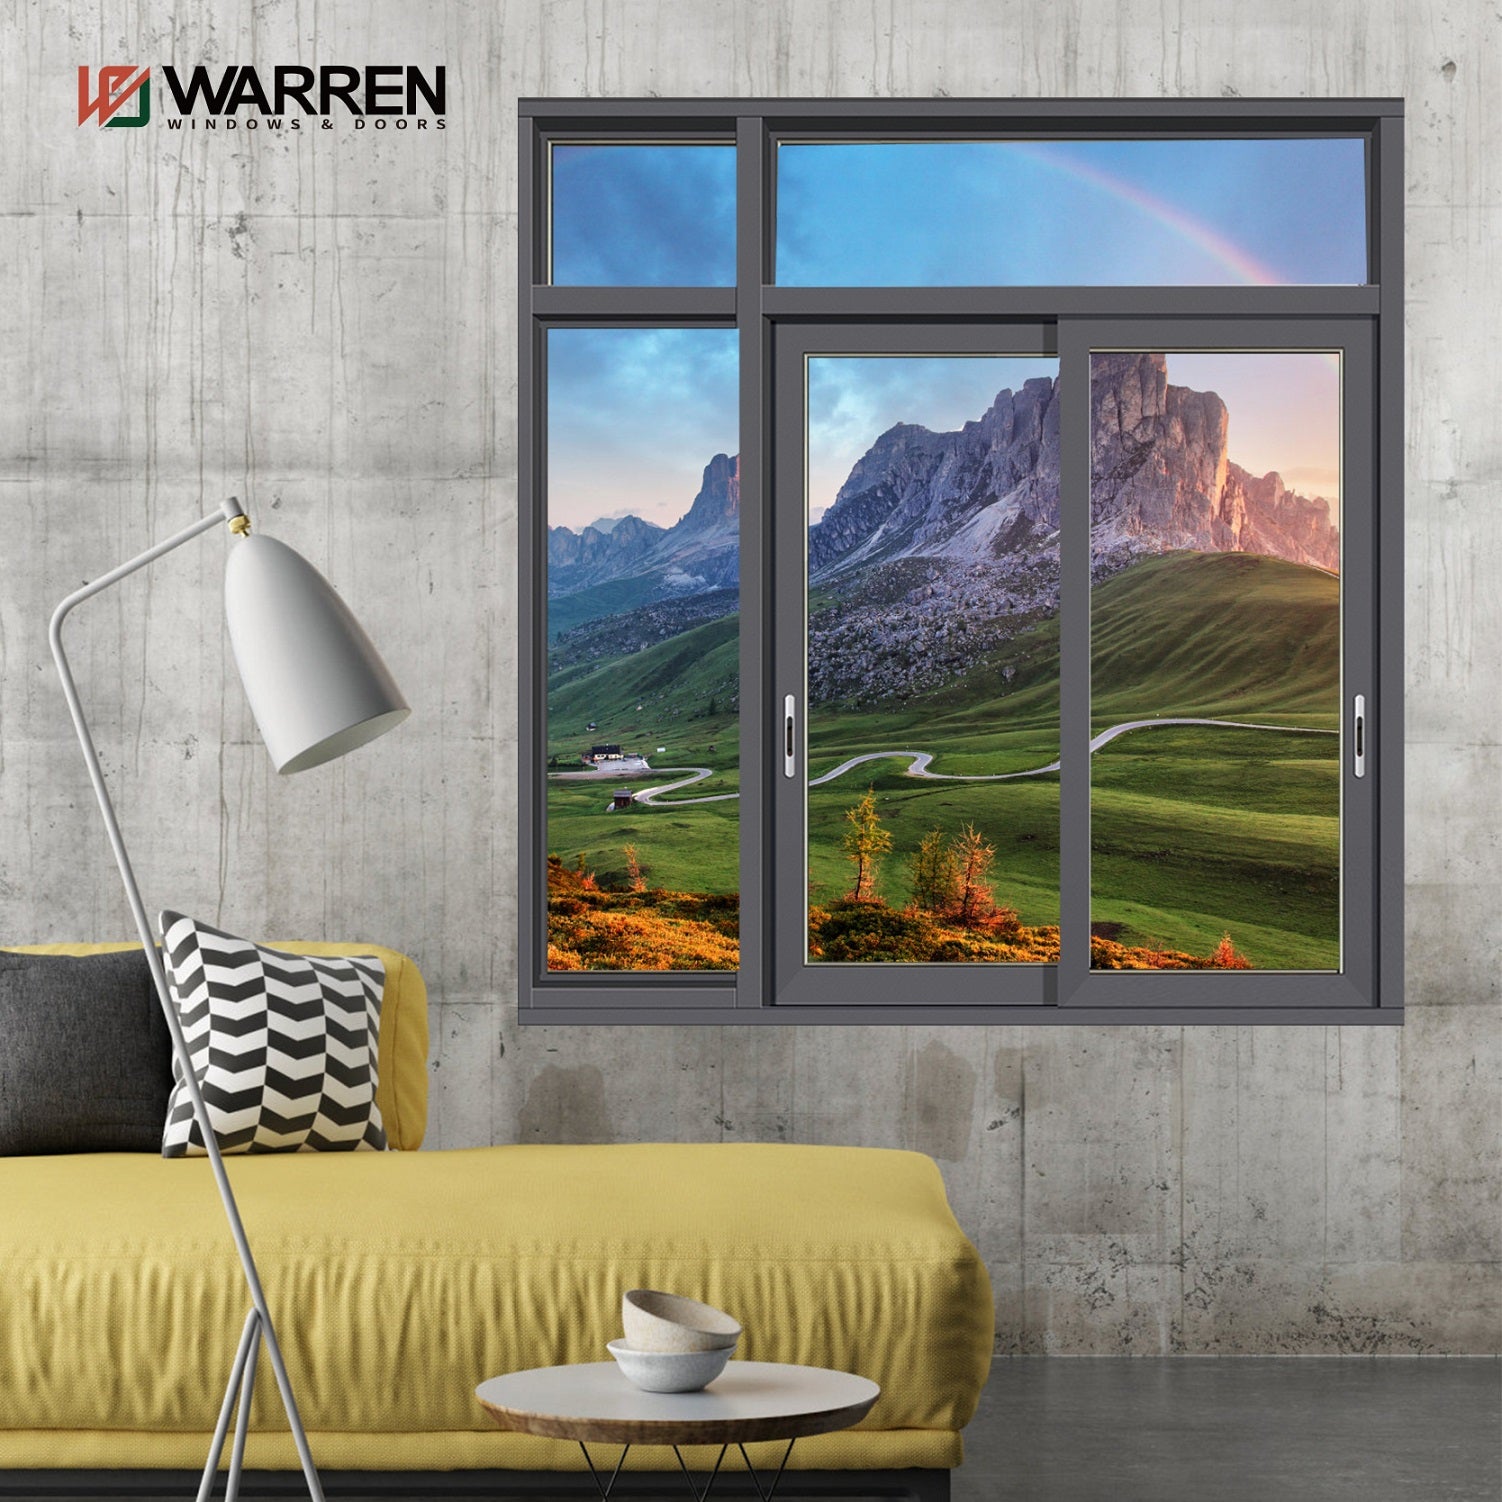 Warren 30x30 window technology competitive price aluminum window glass sliding with double glazing